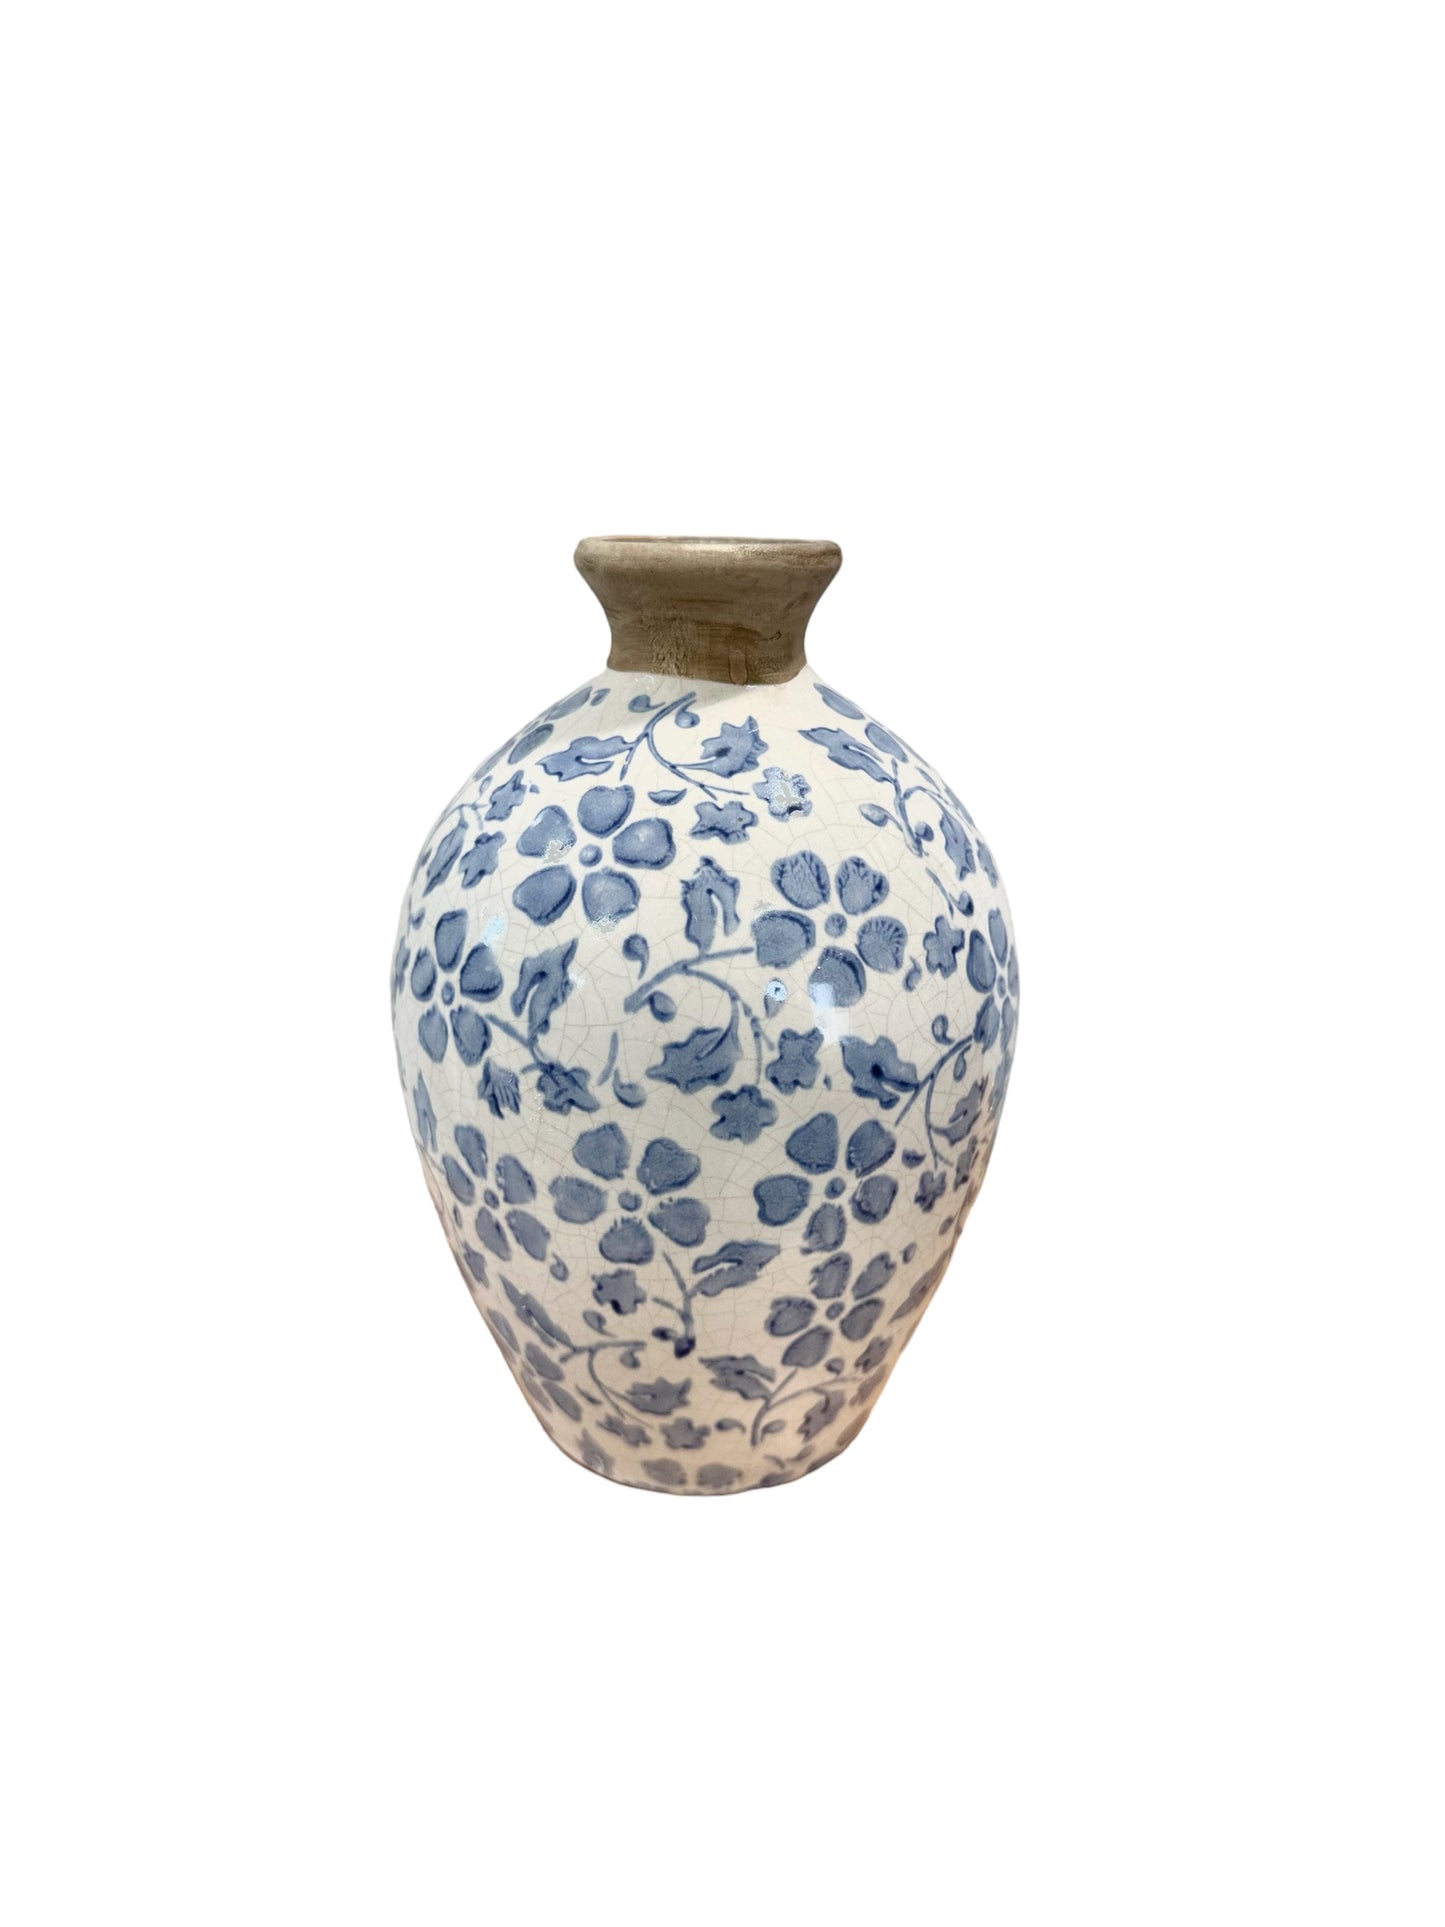 RAZ6622 -Blue / white floral vintage vase.